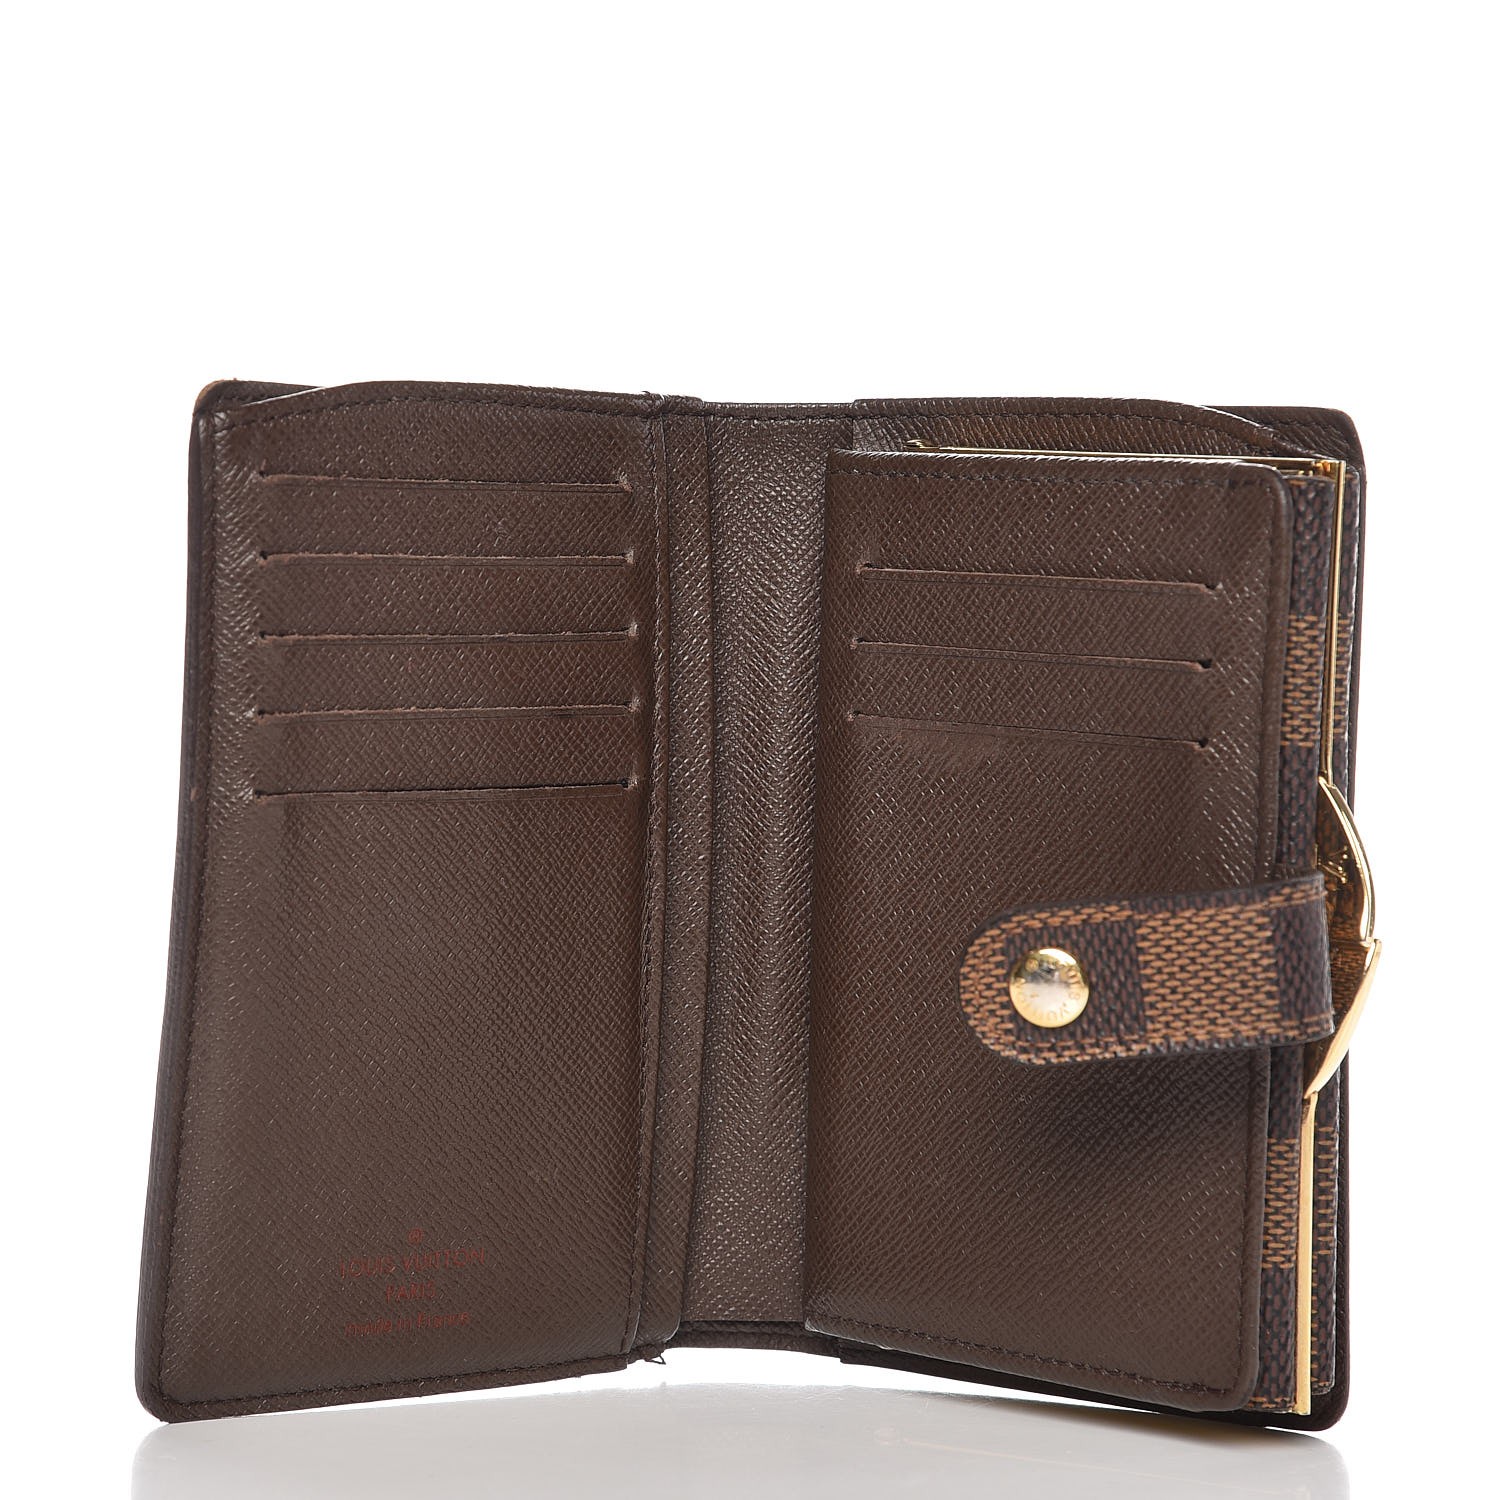 Louis Vuitton Damier Azur French Purse Wallet 521378